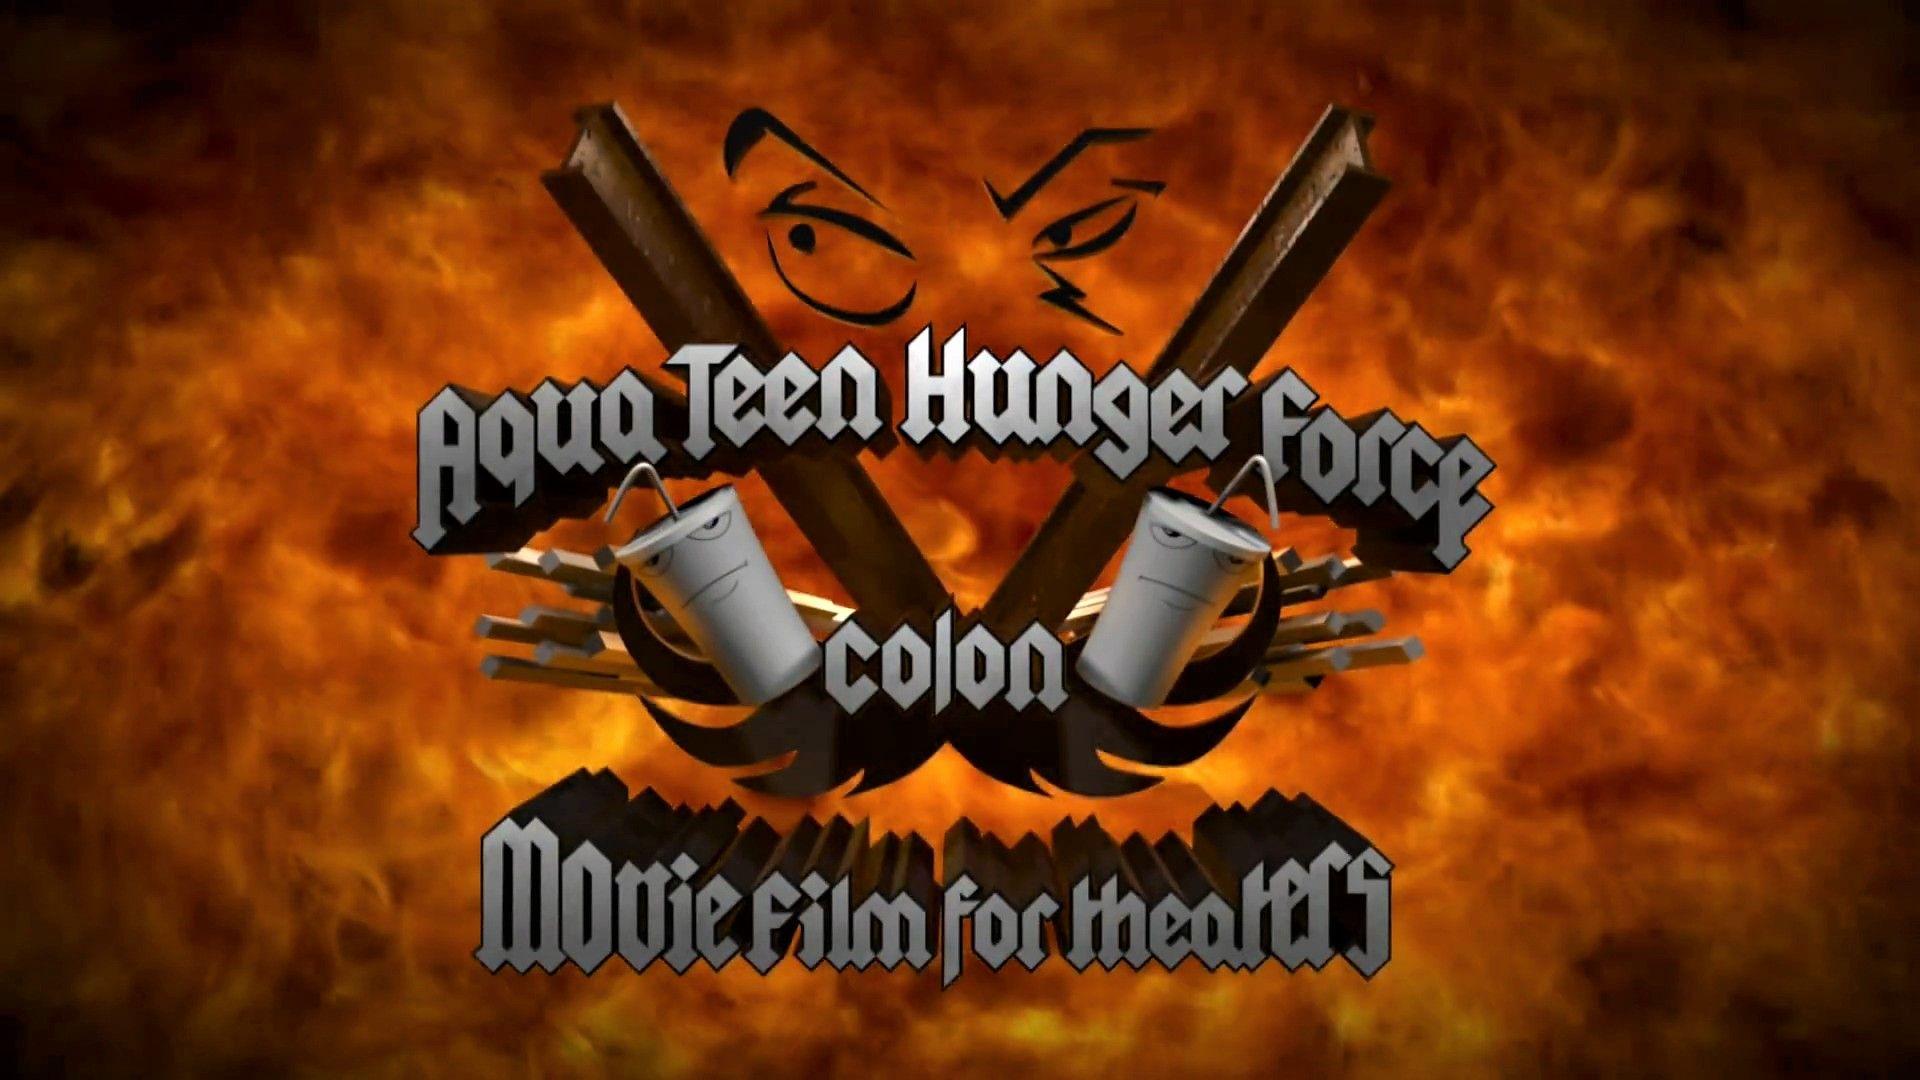 Aqua Teen Hunger Force Logo - Aqua Teen Hunger Force Colon Movie Film for Theaters